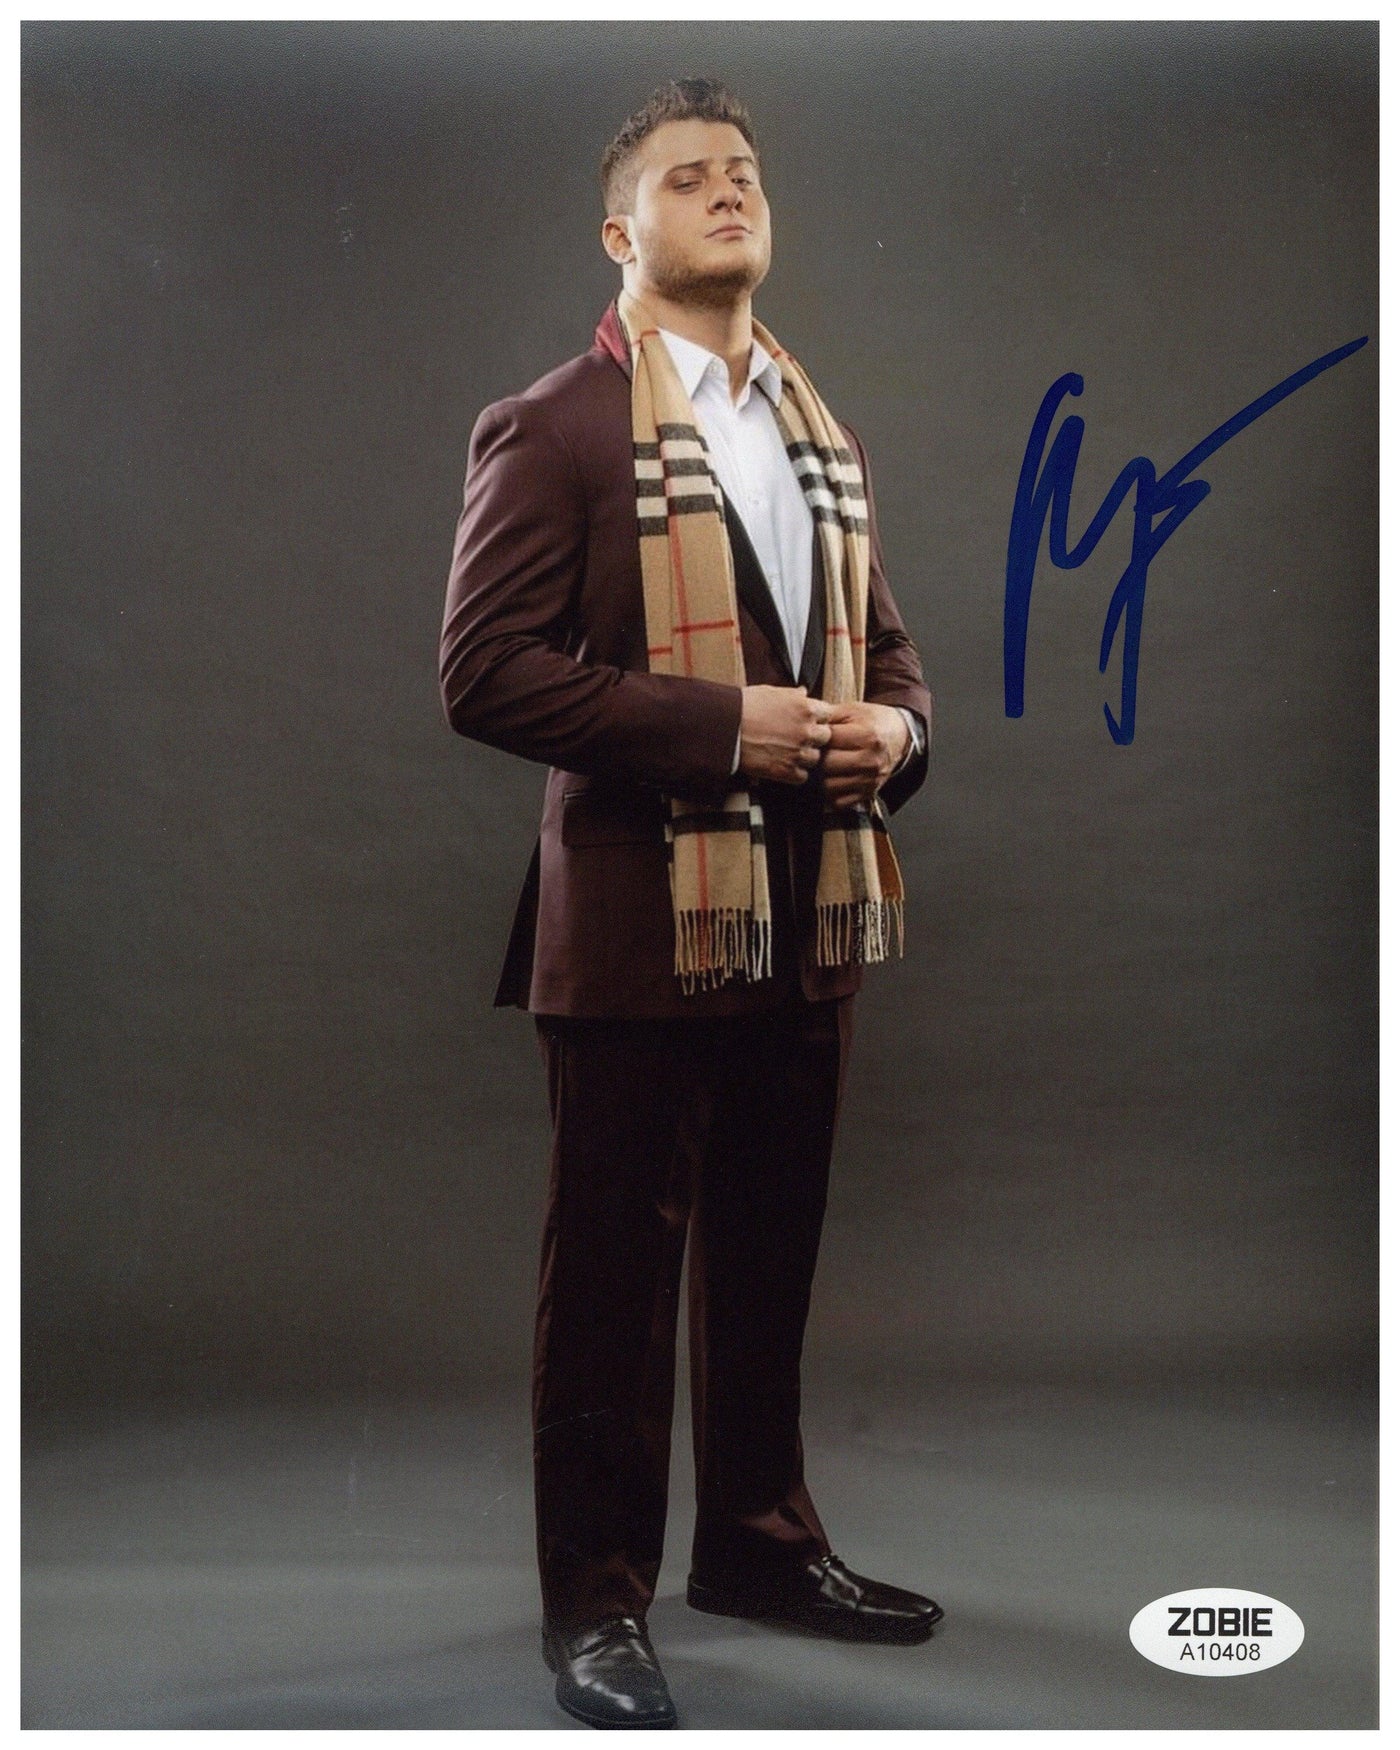 Maxwell Jacob Friedman Signed 8x10 Photo AEW “MJF” Autographed Zobie COA #2